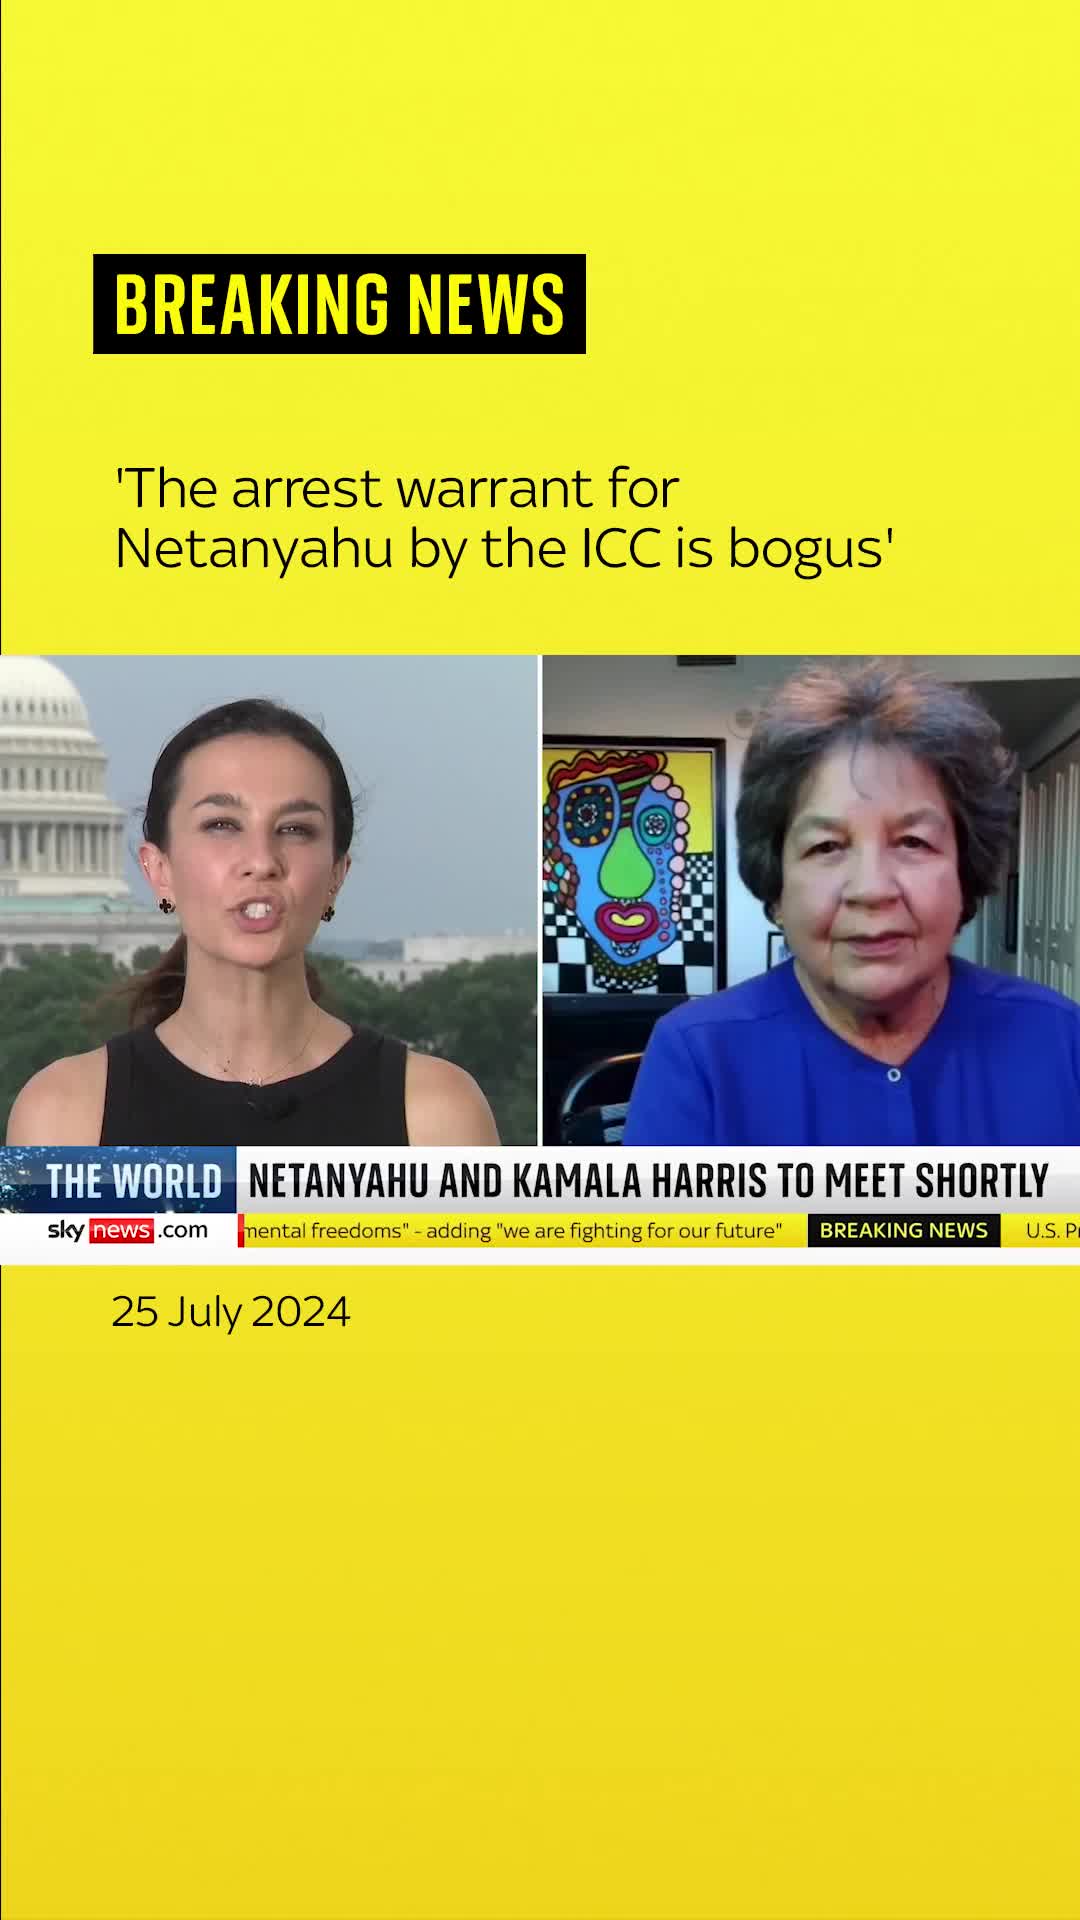 'The arrest warrant for Netanyahu by the ICC is bogus', says Democratic congresswoman, Lois Frankel. #netanyahu #israel #congress